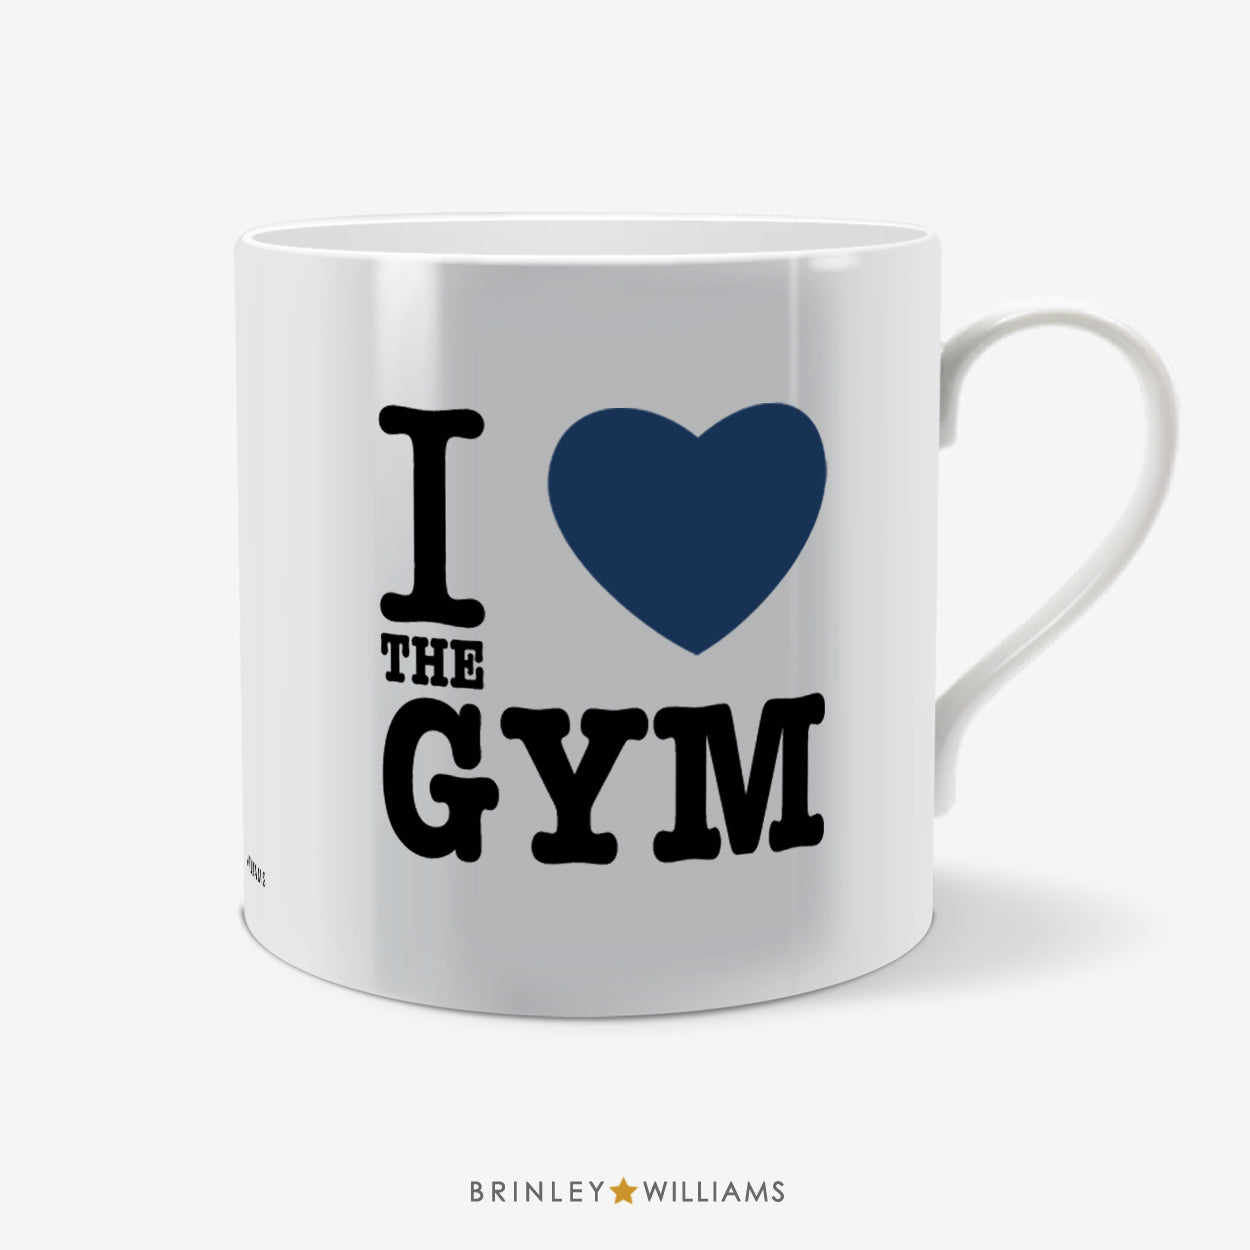 I Love the Gym Fun Mug - Navy